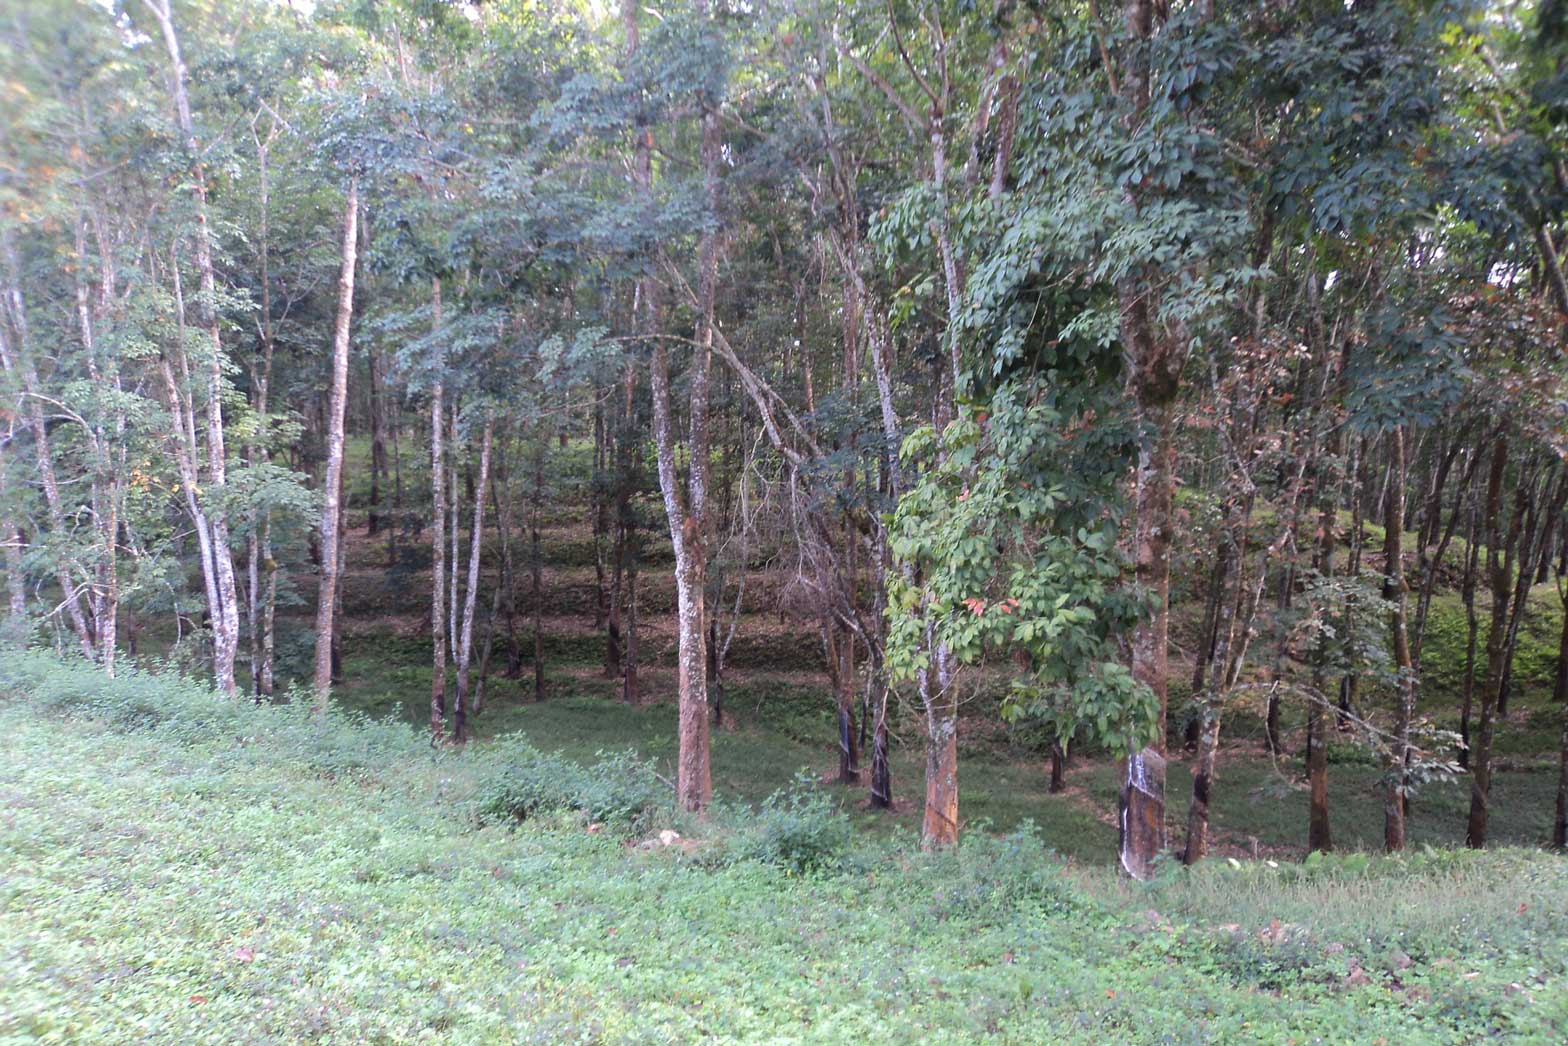 Rubber Trees, Uganda